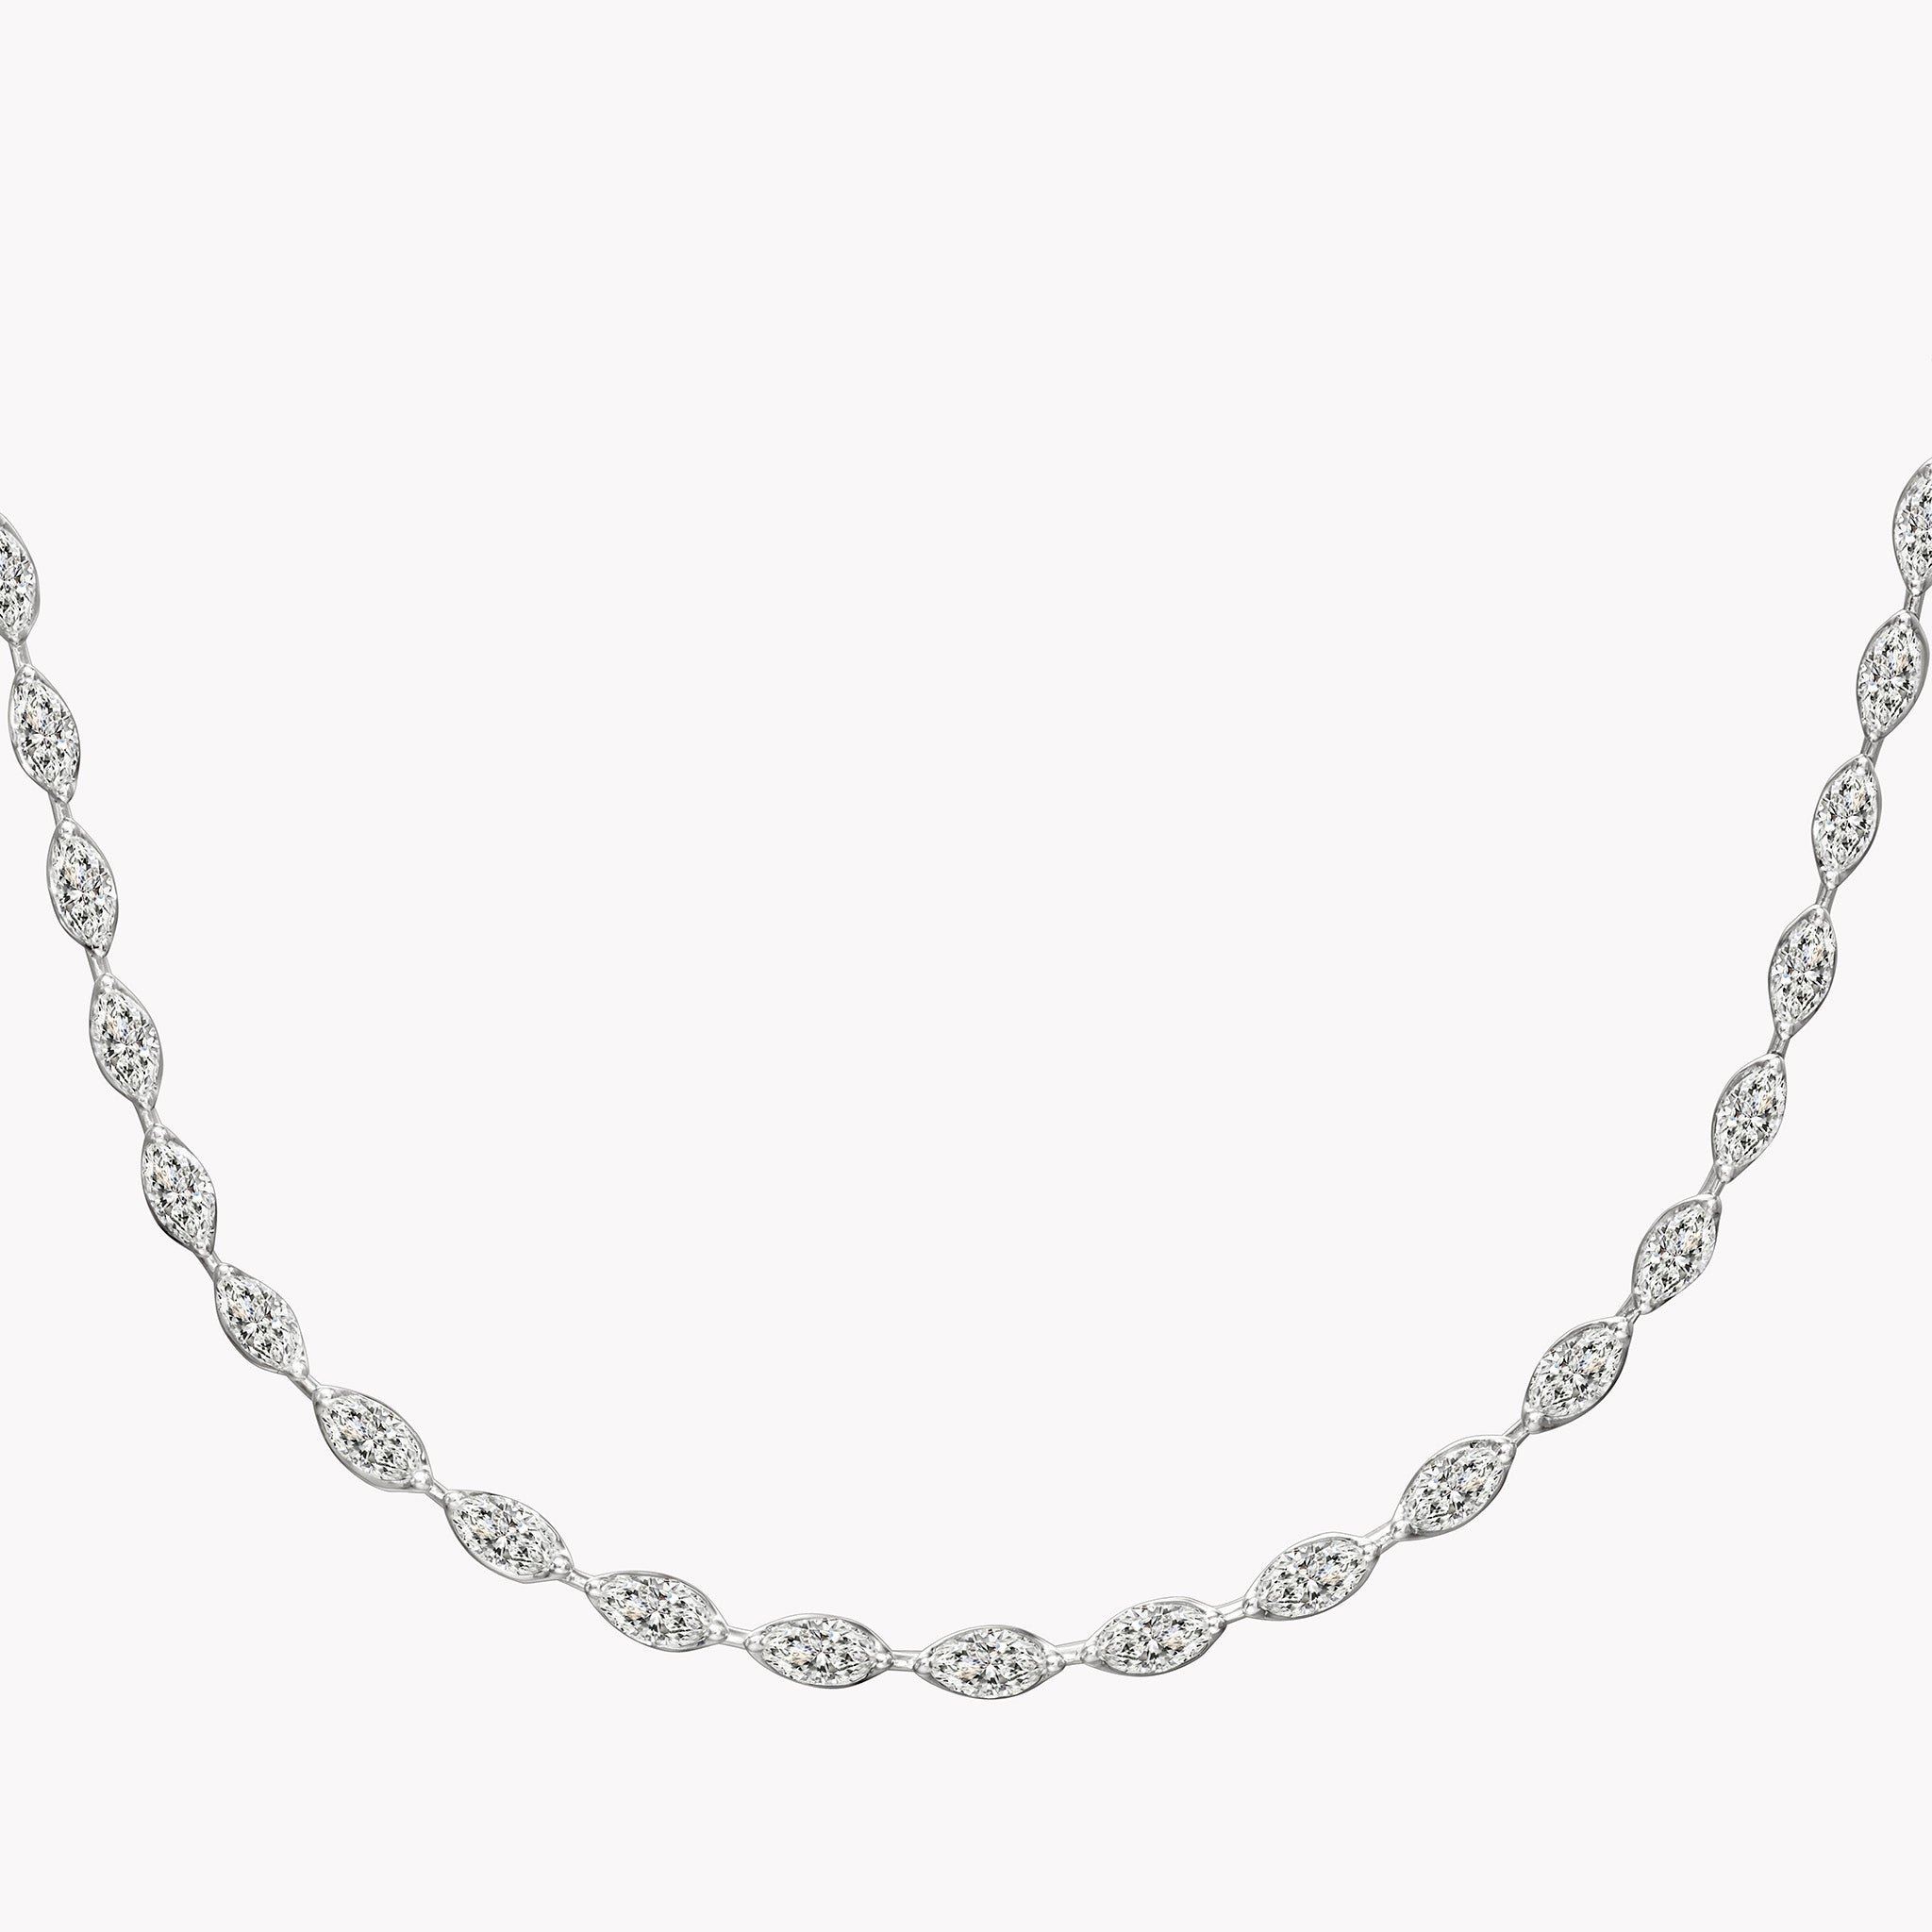 The Elle Diamond Necklace